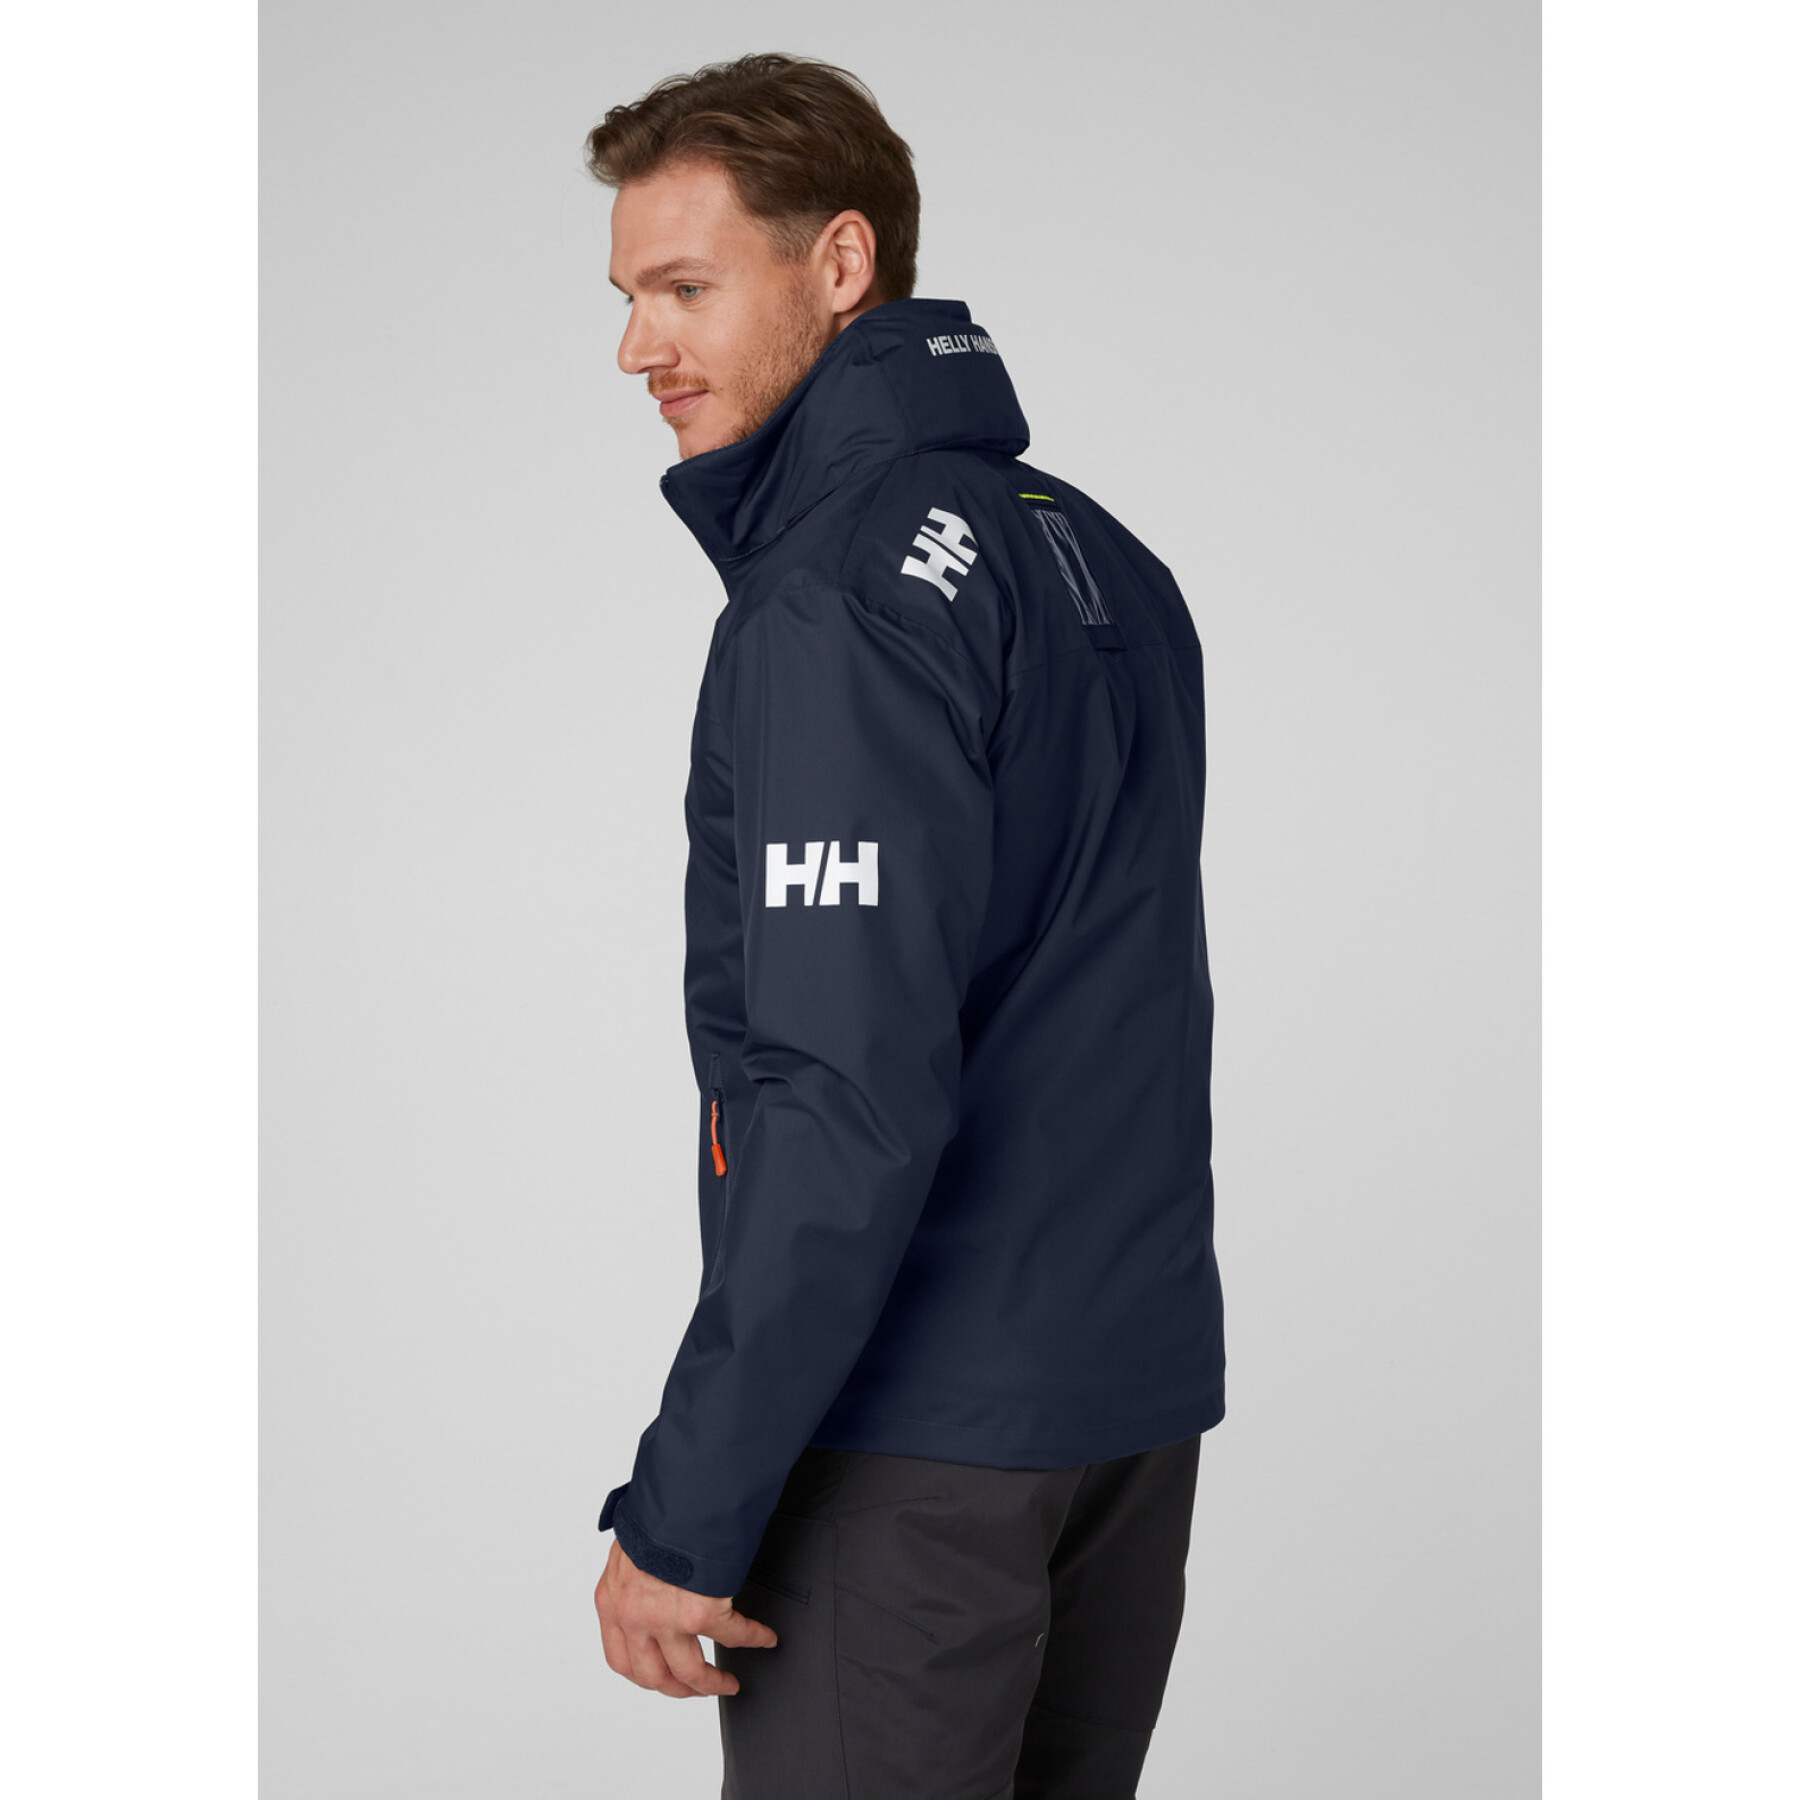 Hooded jacket Helly Hansen crew